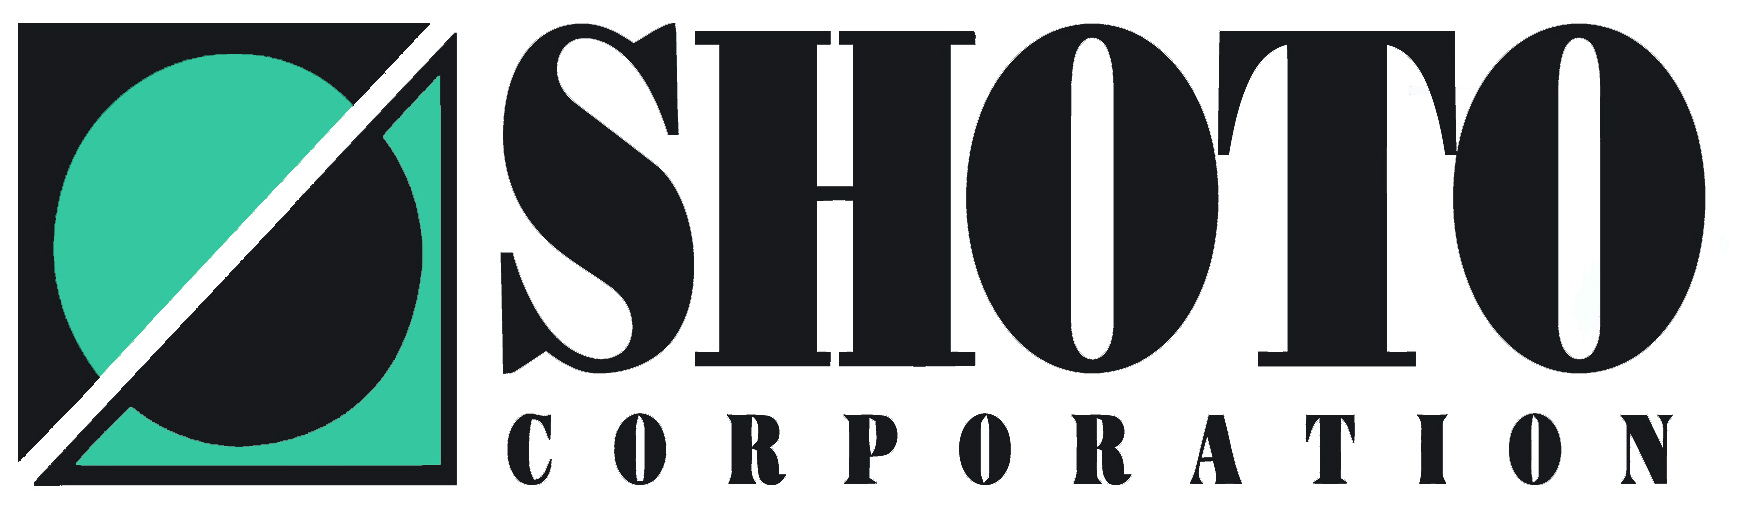 Shoto Corporation